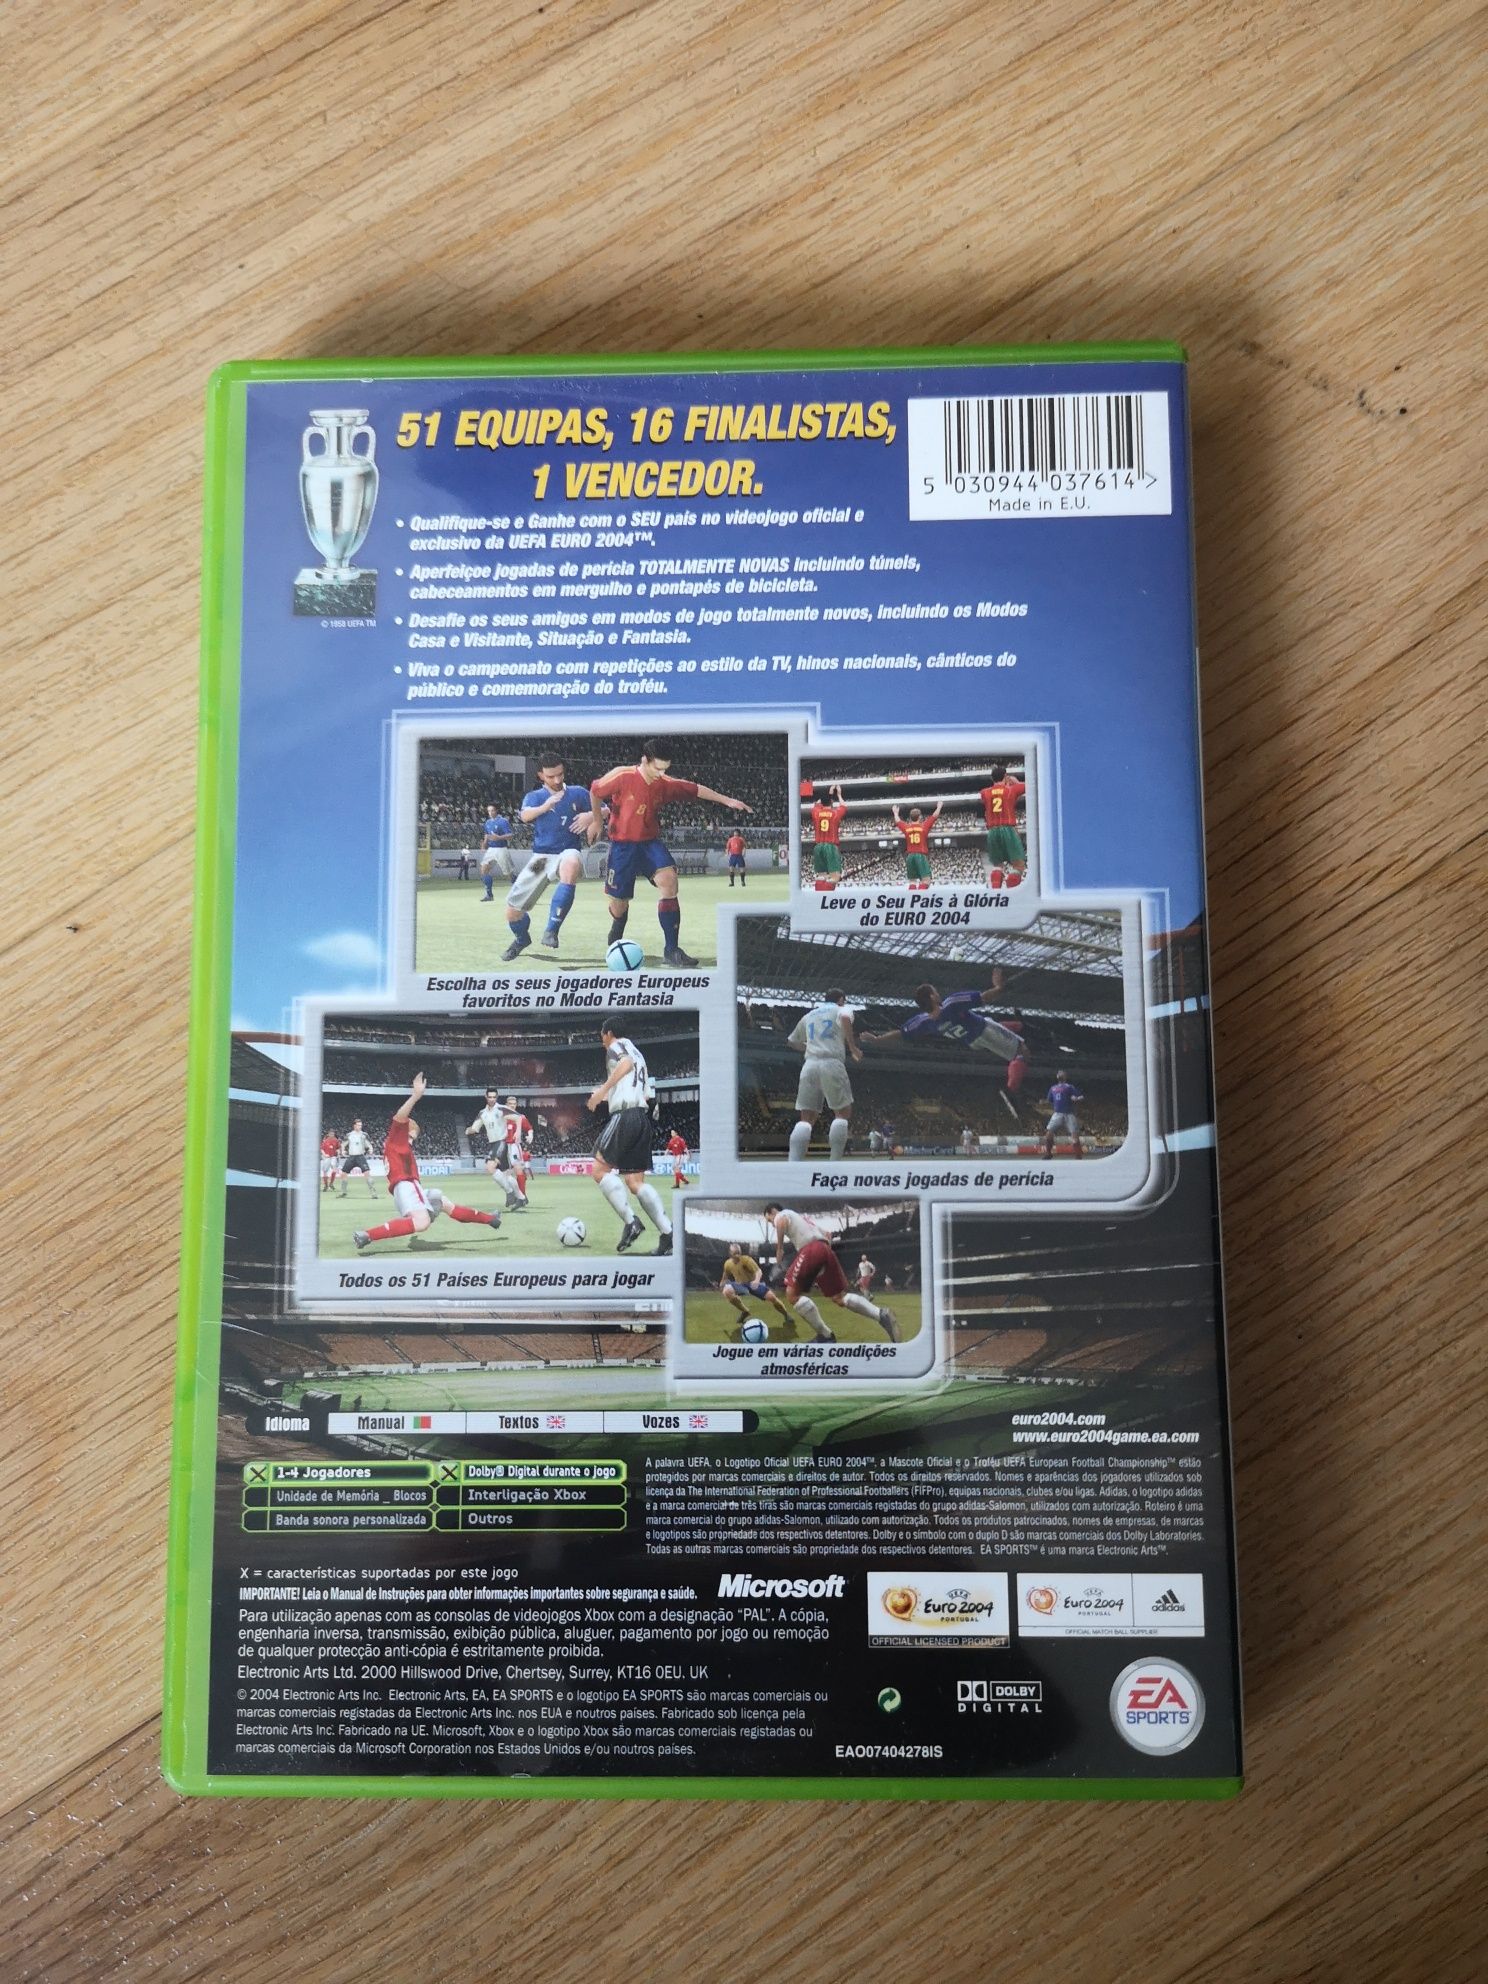 UEFA Euro 2004 Portugal (Xbox)